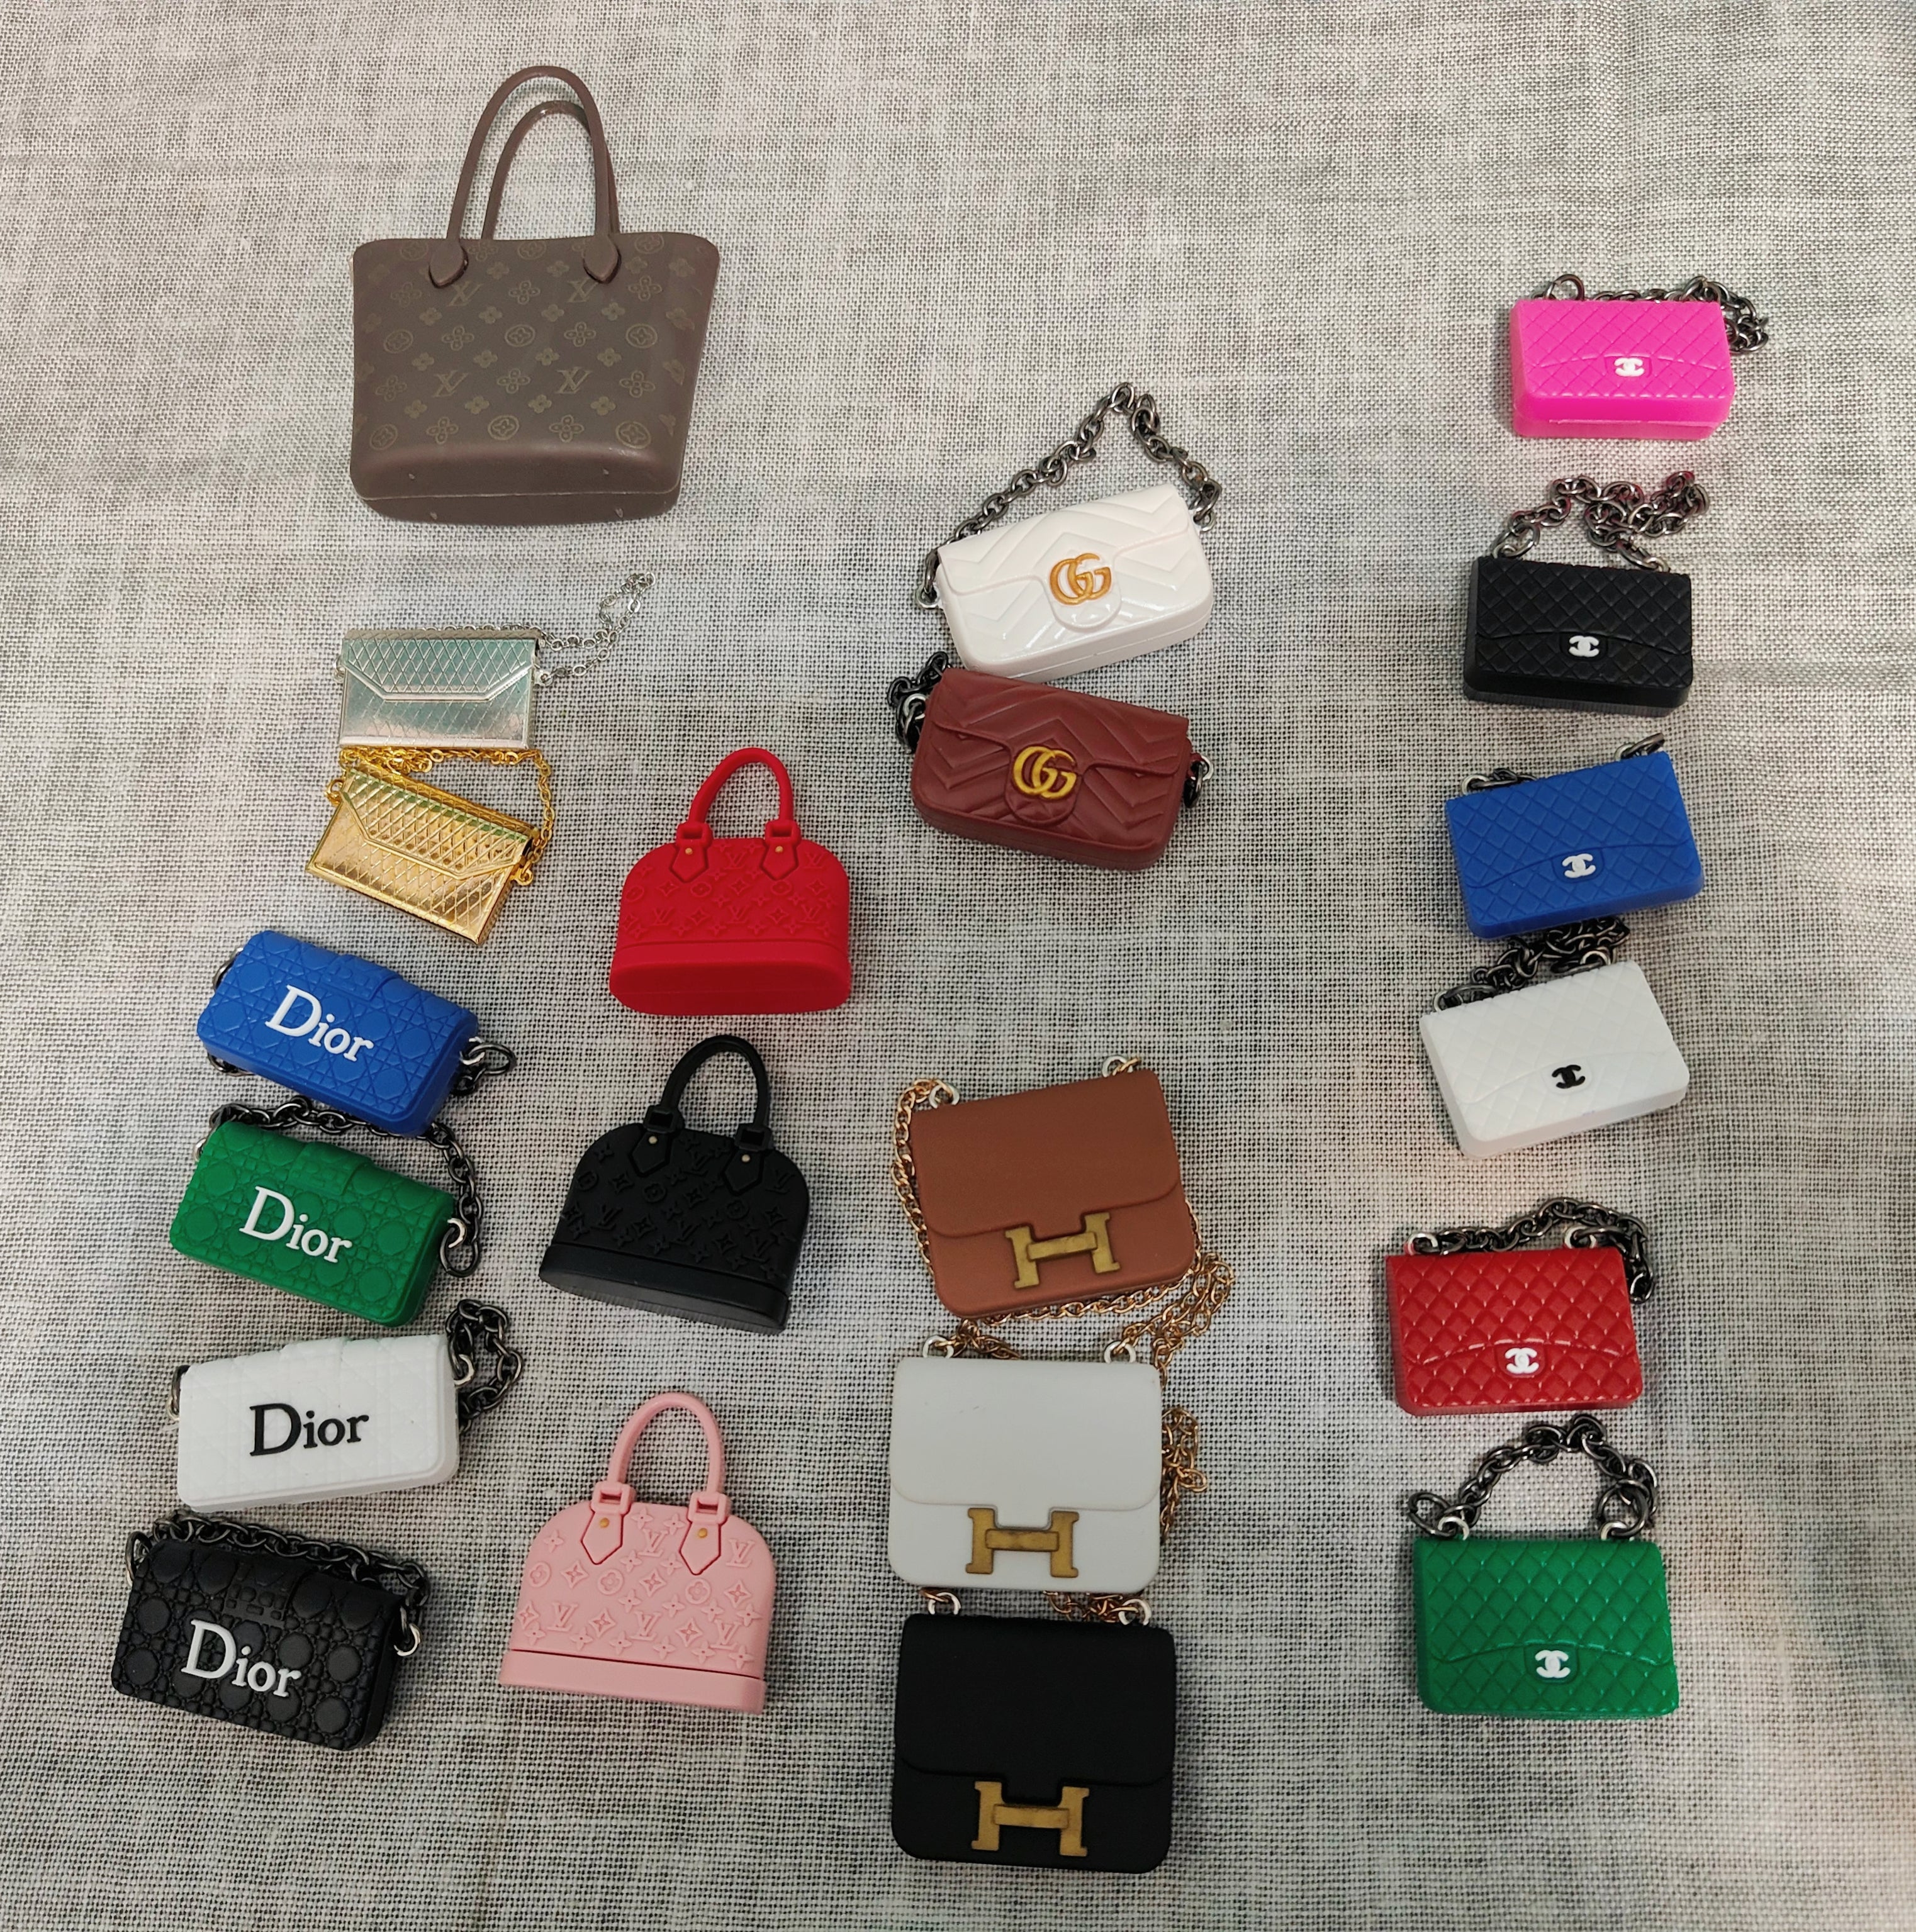 1:12 Doll House Mini Handbag Purse – Hey Toy World